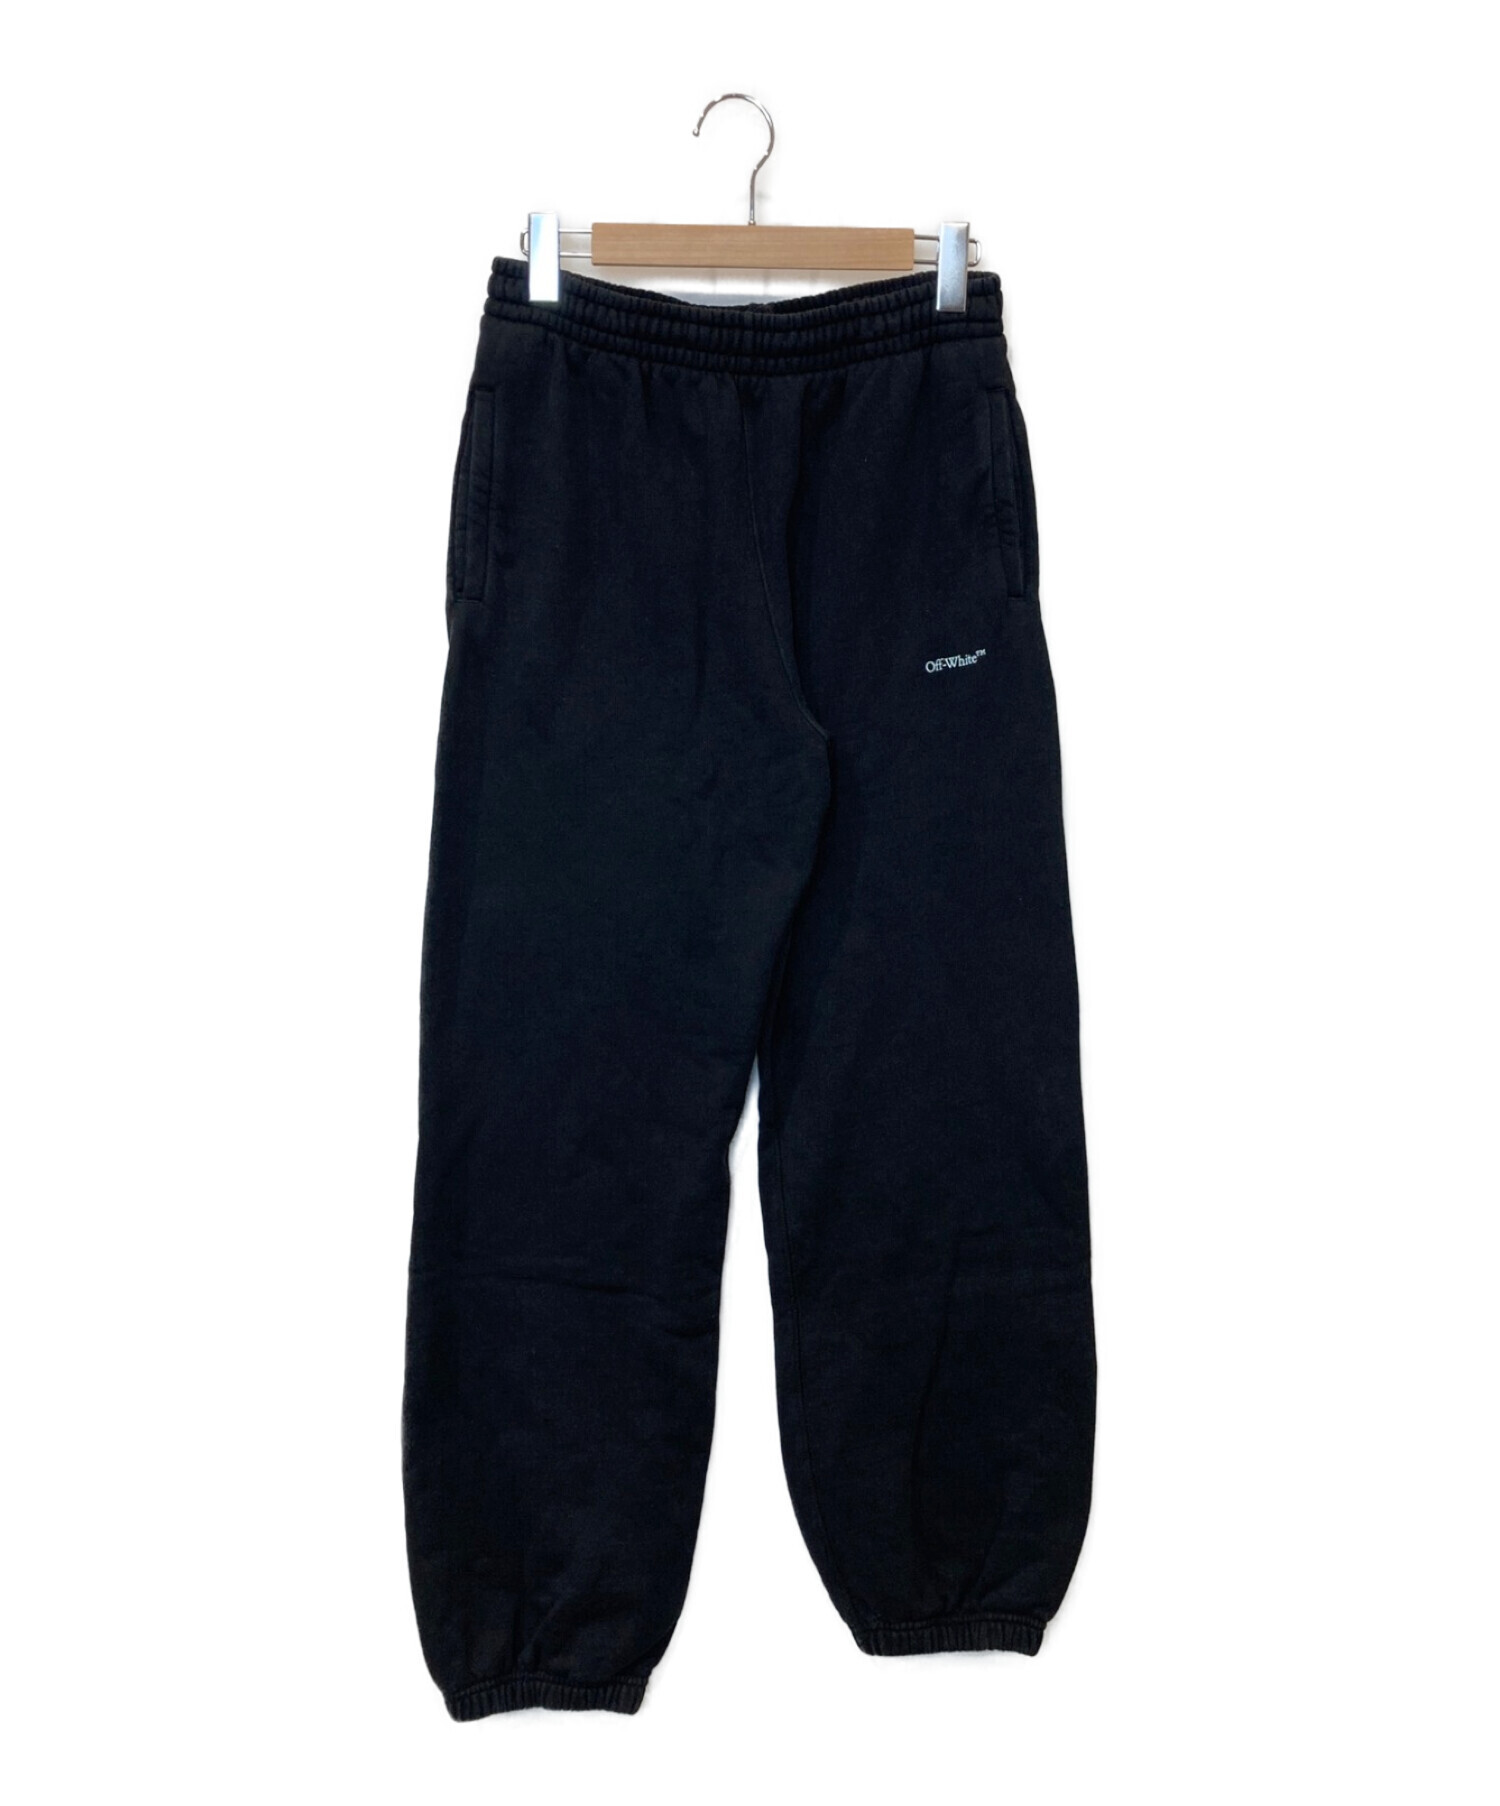 OFFWHITE (オフホワイト) MARKER SLIM Trousers / スウェットパンツ ブラック サイズ:S